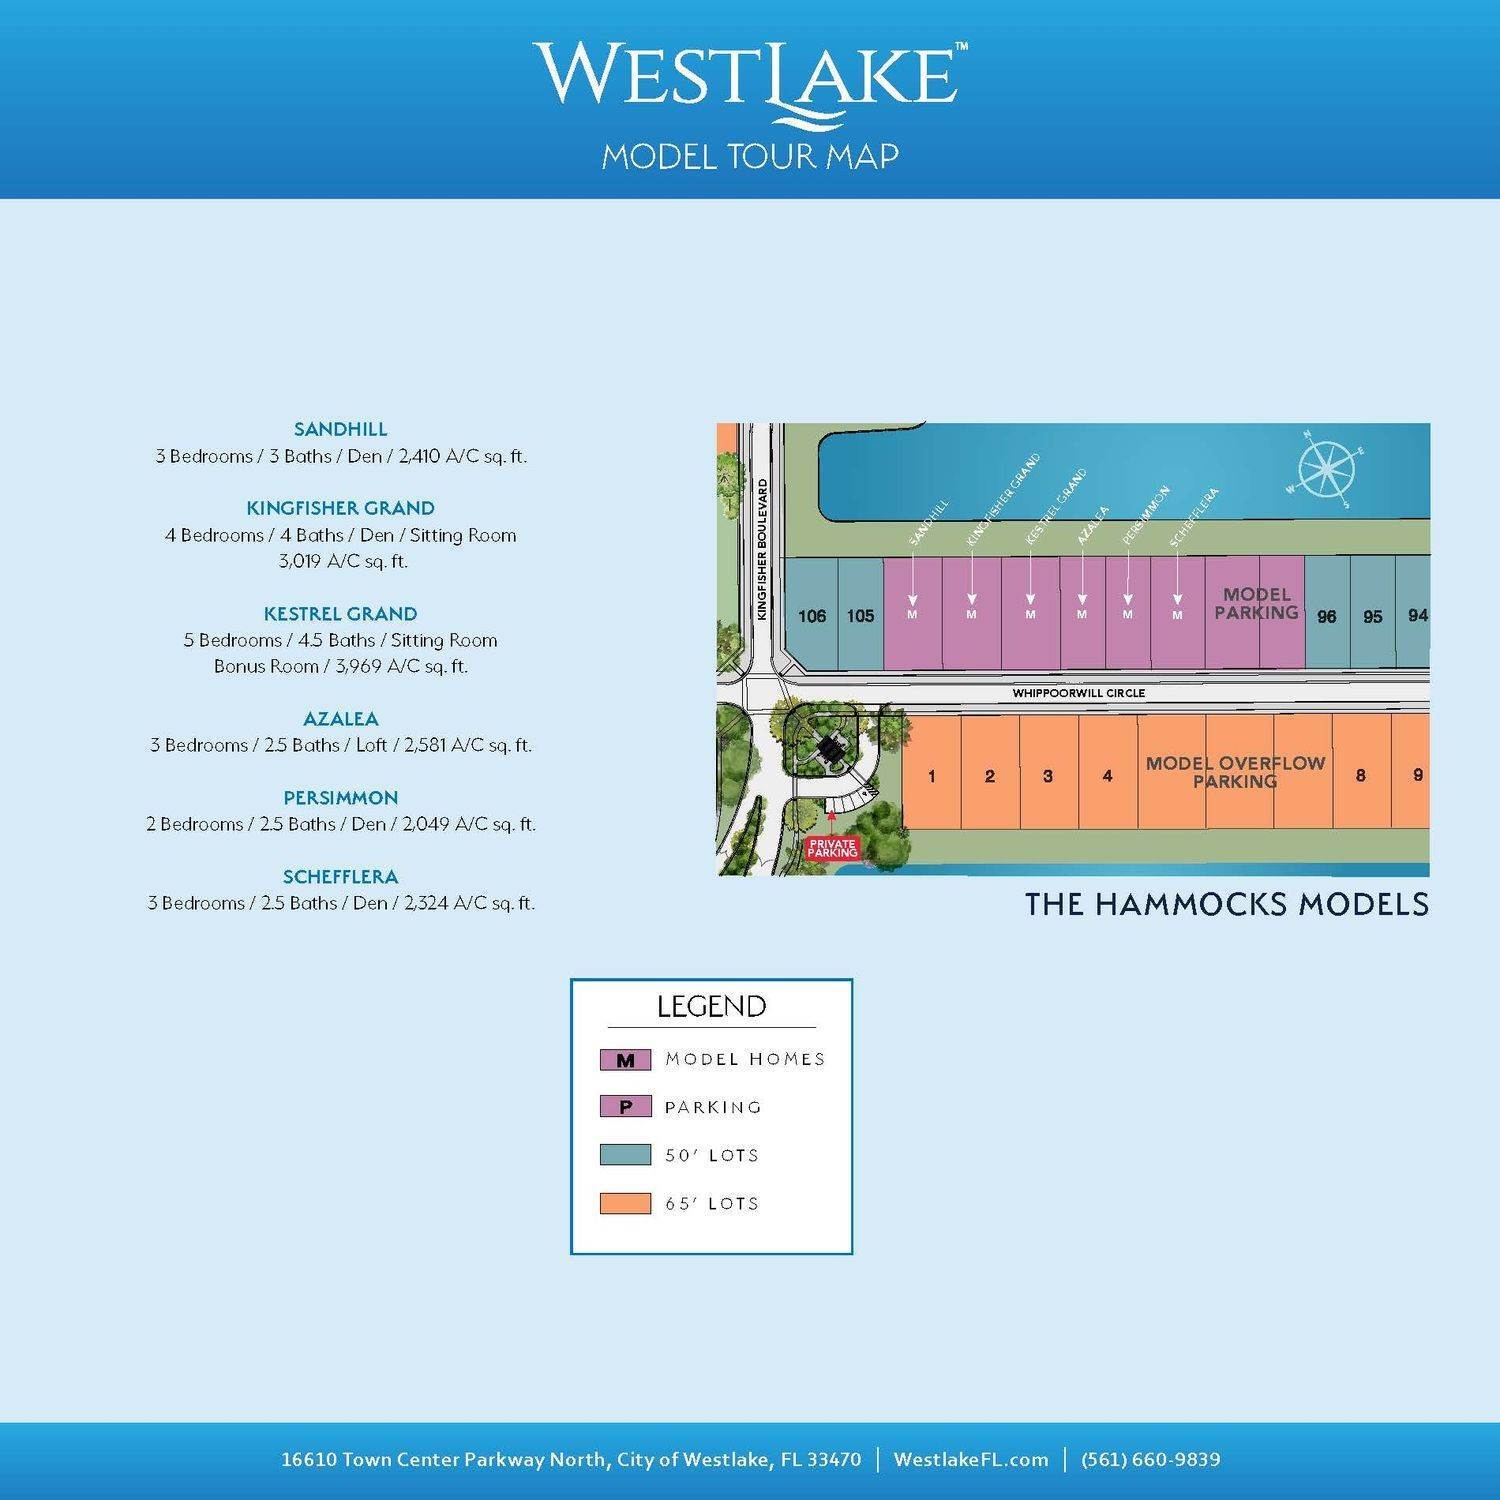 4. Westlake建于 16610 Town Center Parkway North, 克萨哈奇, FL 33470